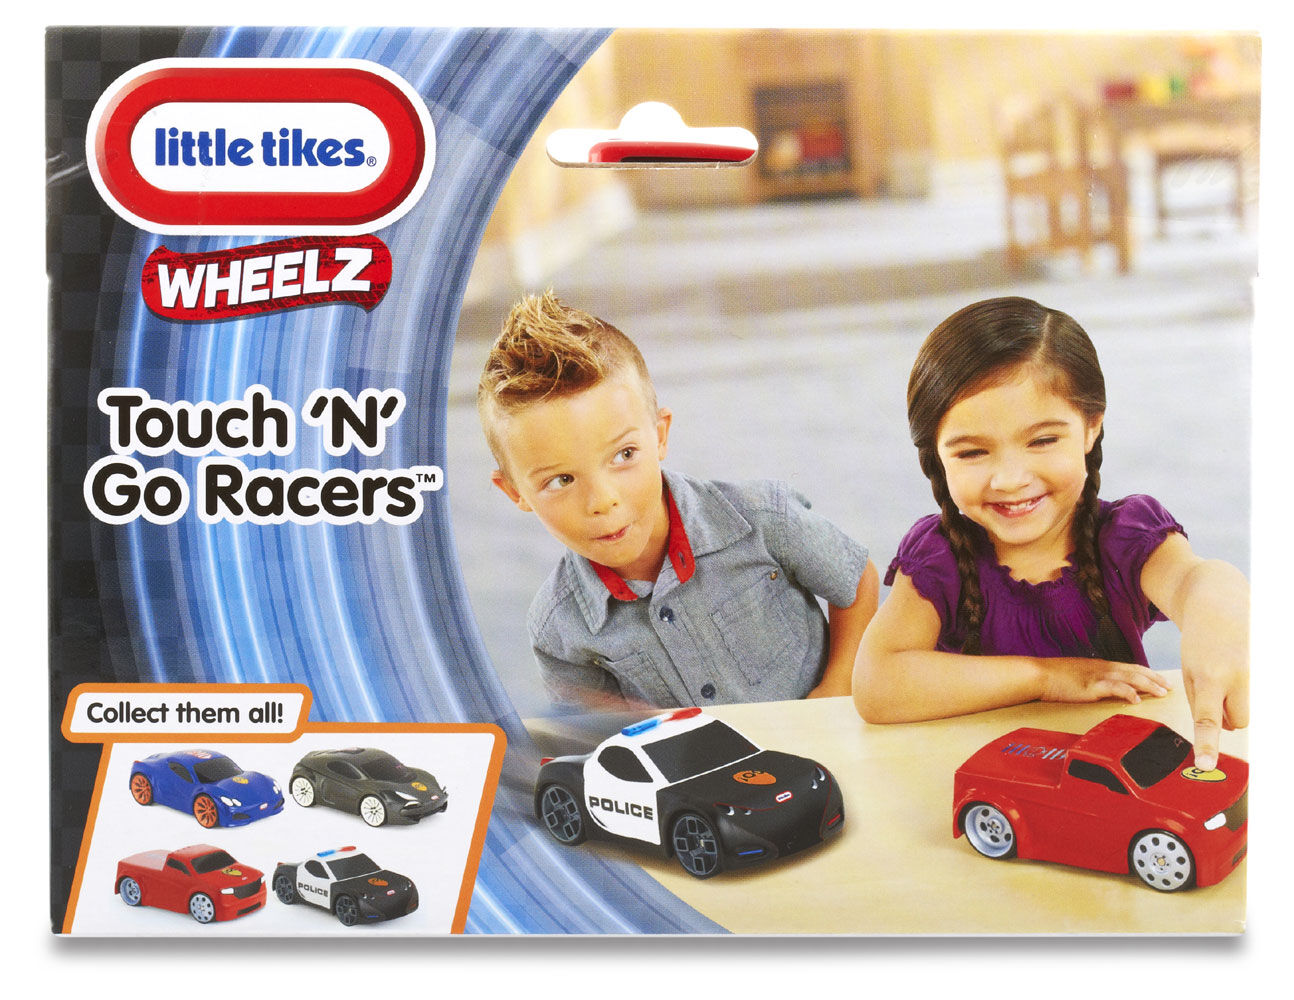 little tikes wheelz touch n go racers